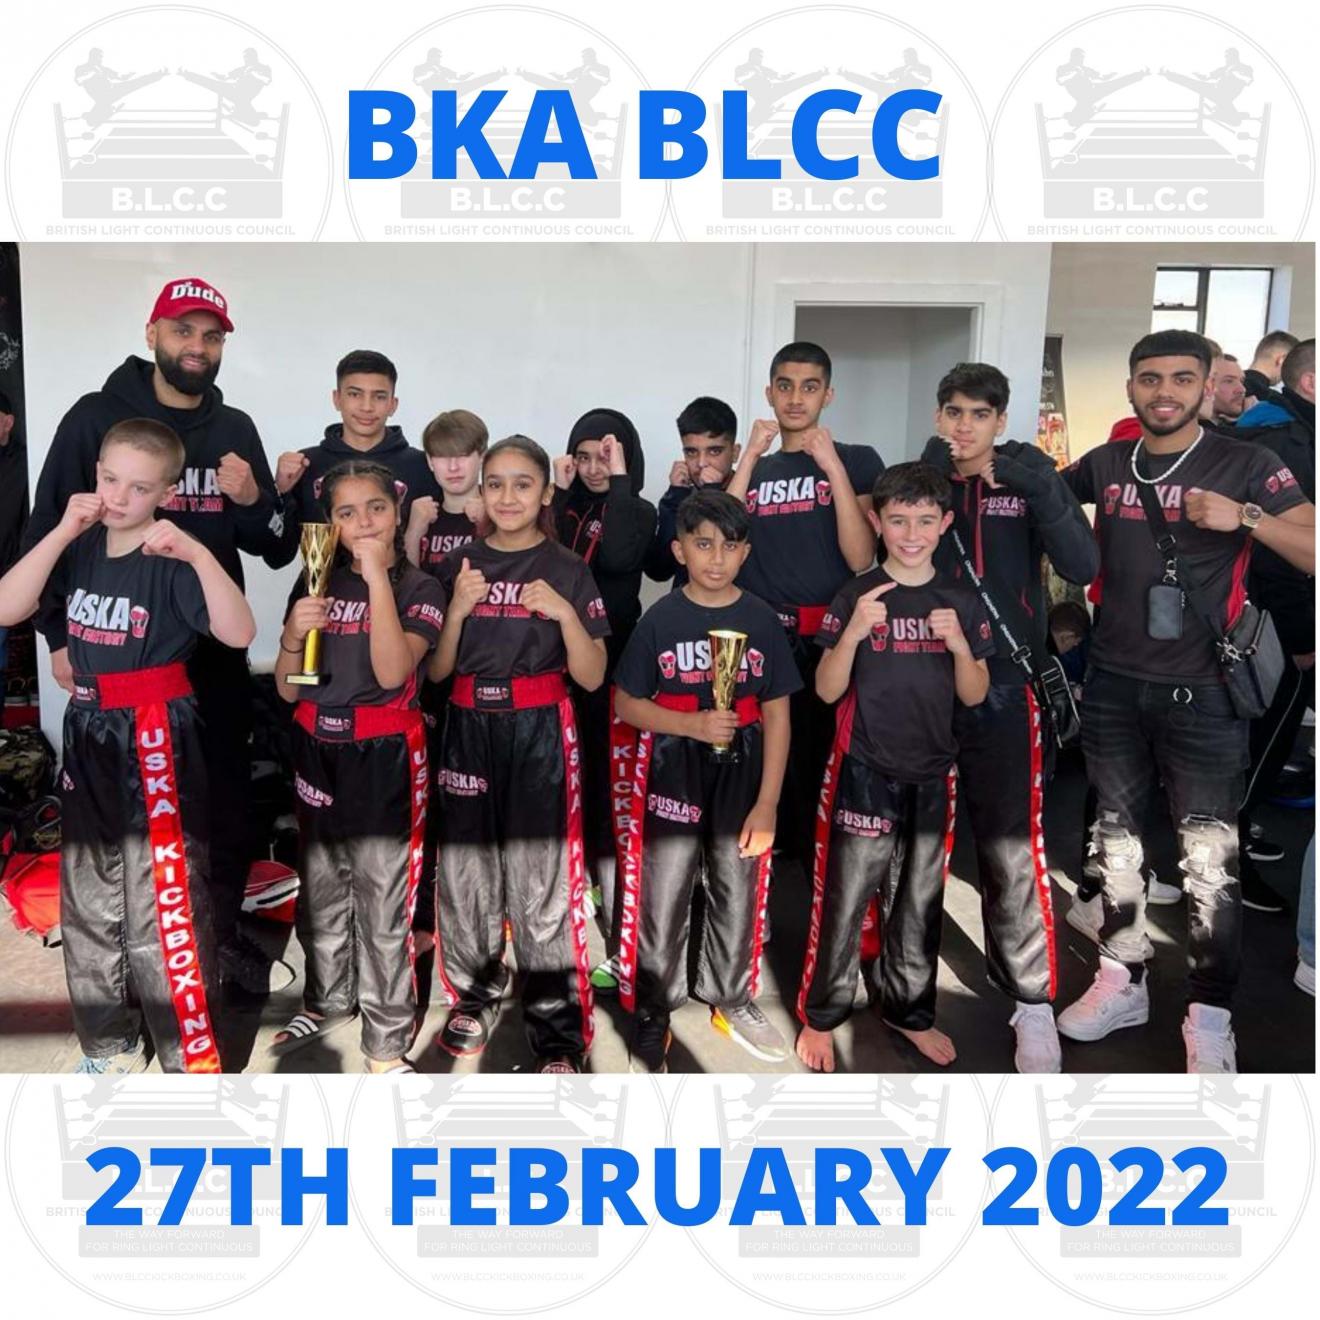 27-02-22 - USKA at the BKA BLCC event in Burton